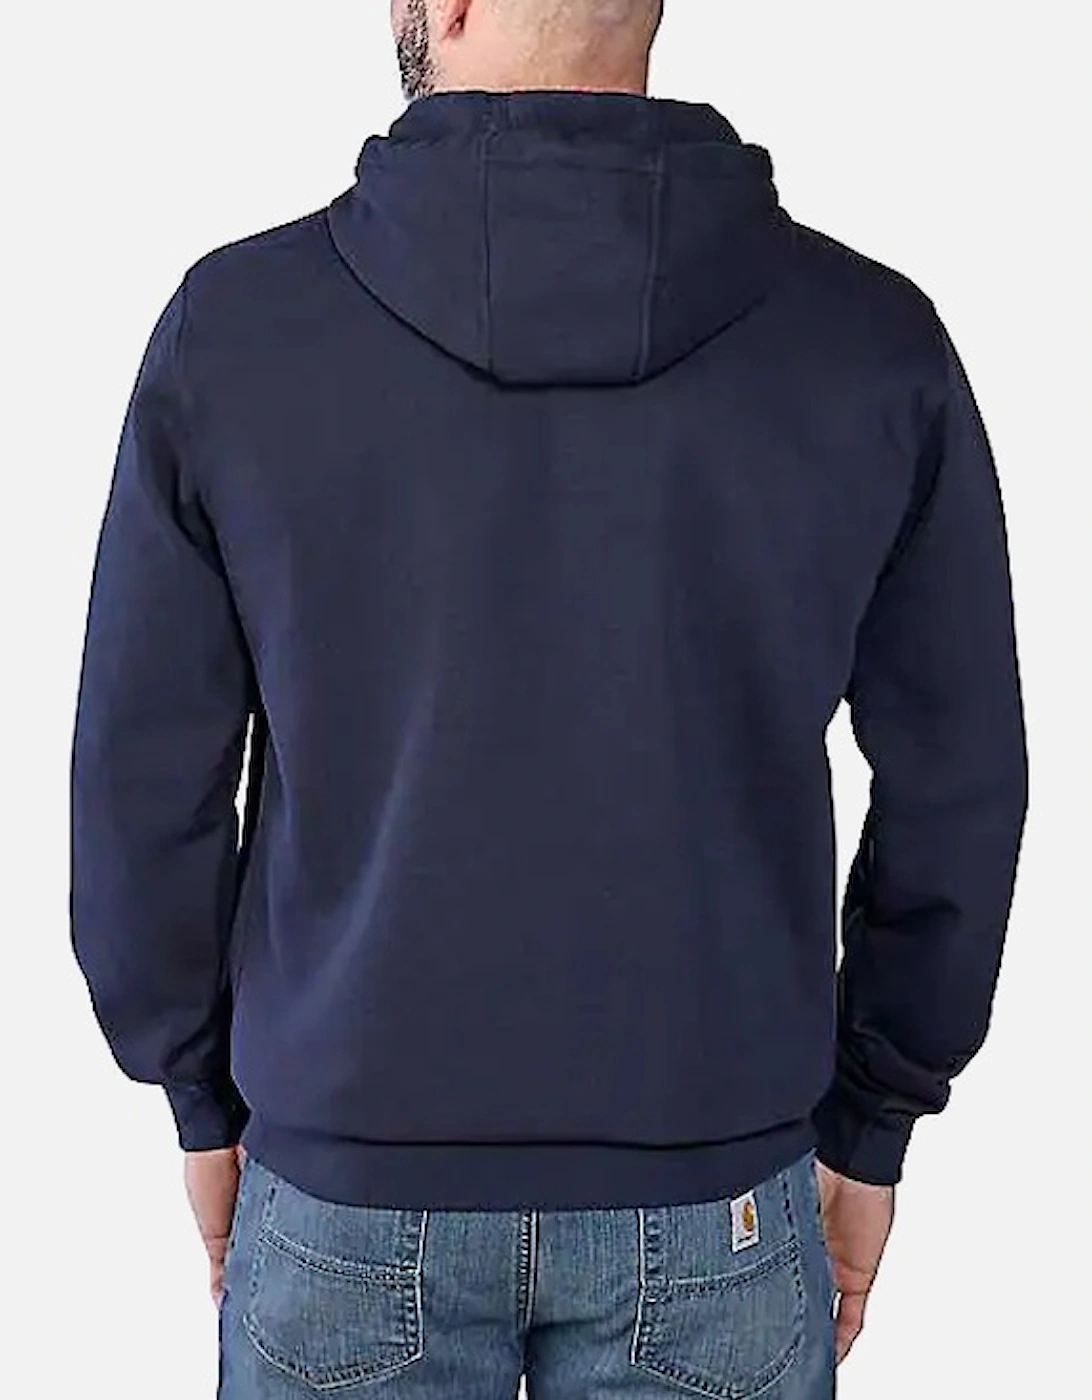 Carhartt Rain Defender Loose Fit Midweight Logo Graphic Sweatshirt Navy